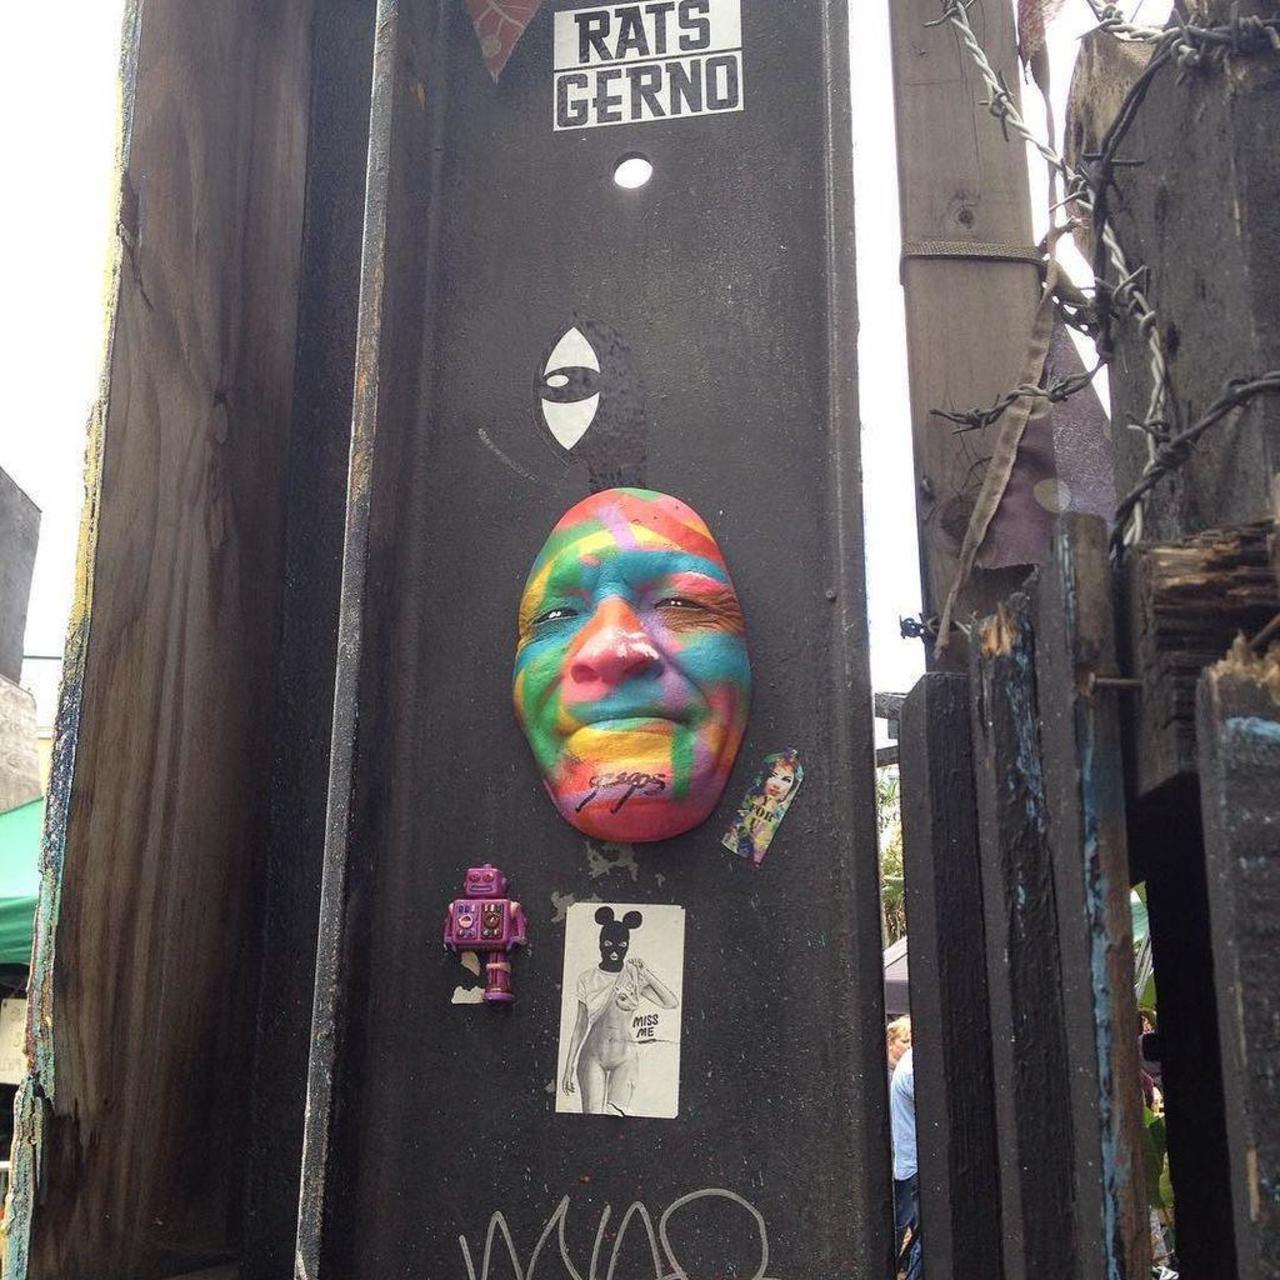 #streetart #streetartlondon #graffiti #london #thisislondon by isadarko http://t.co/JHrSz8pHN1